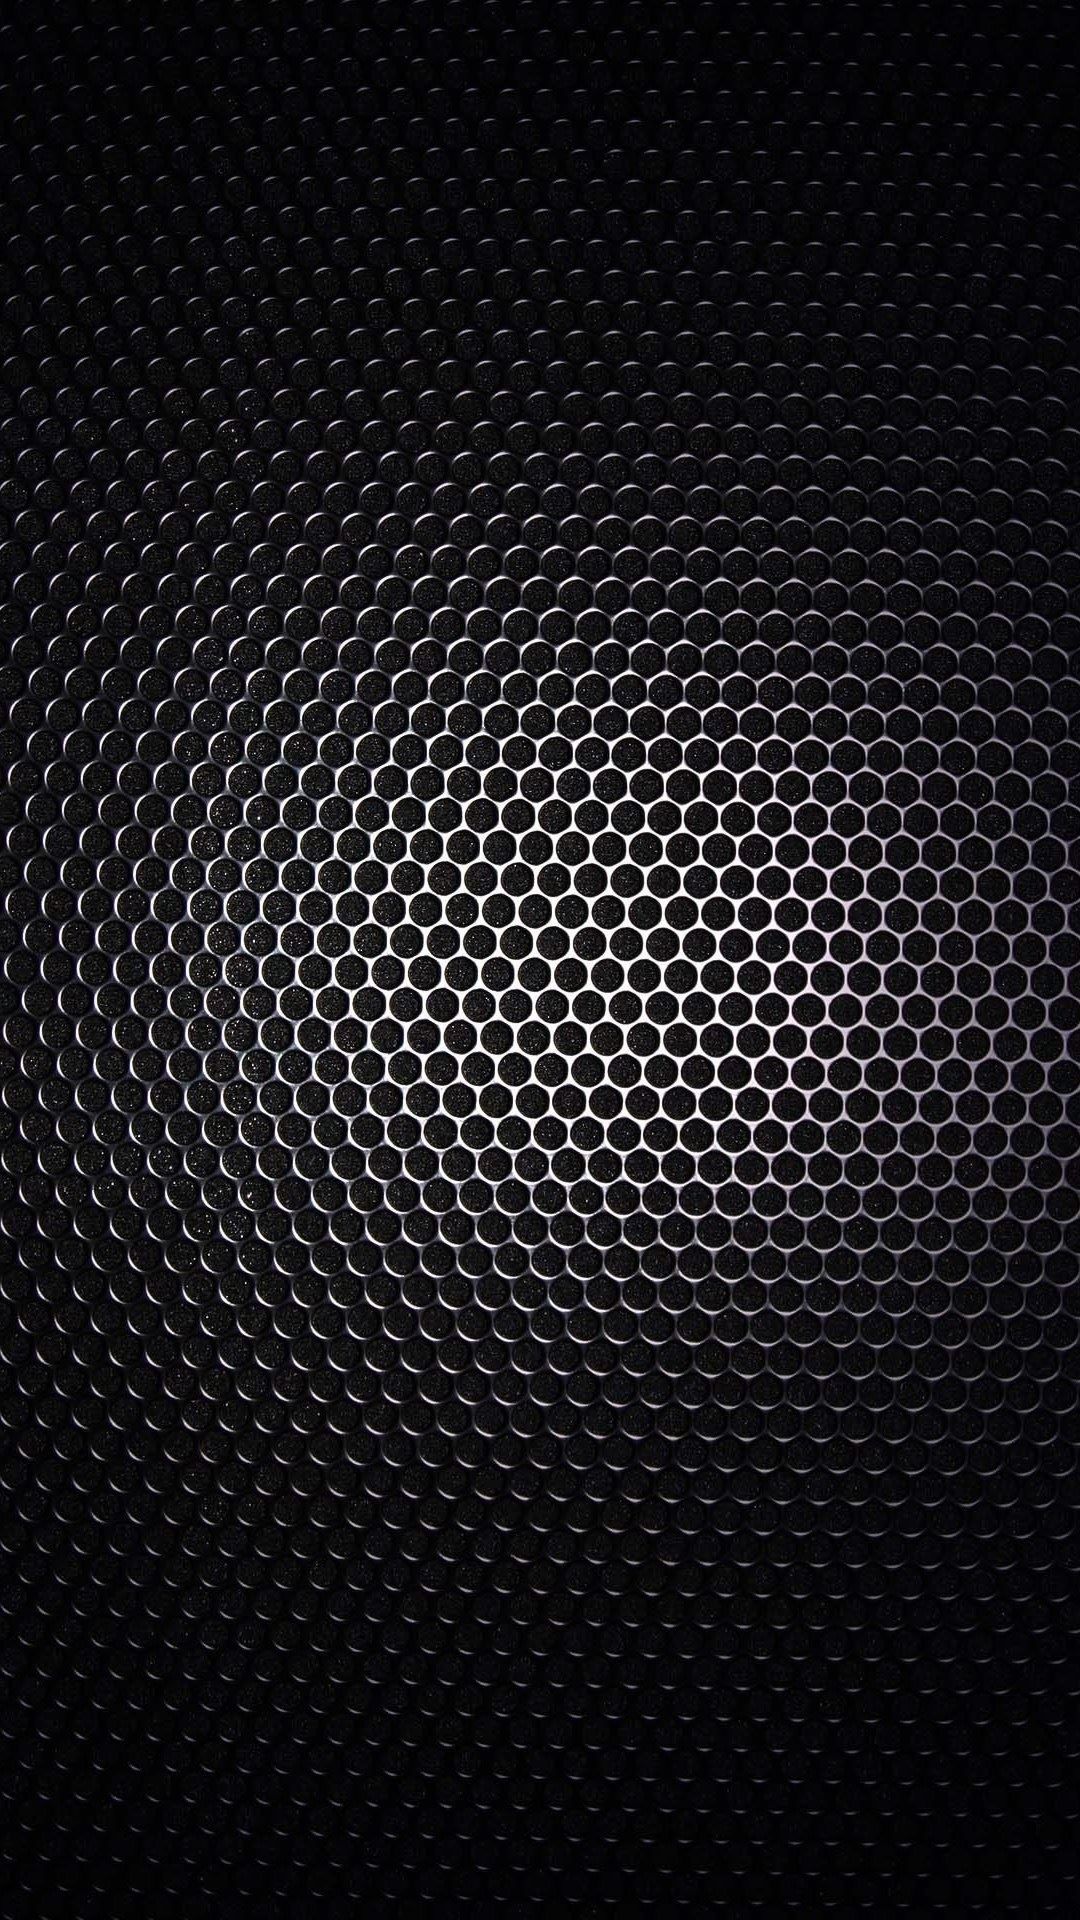 Dark Metal Grid Pattern wallpaper | Android Wallpapers